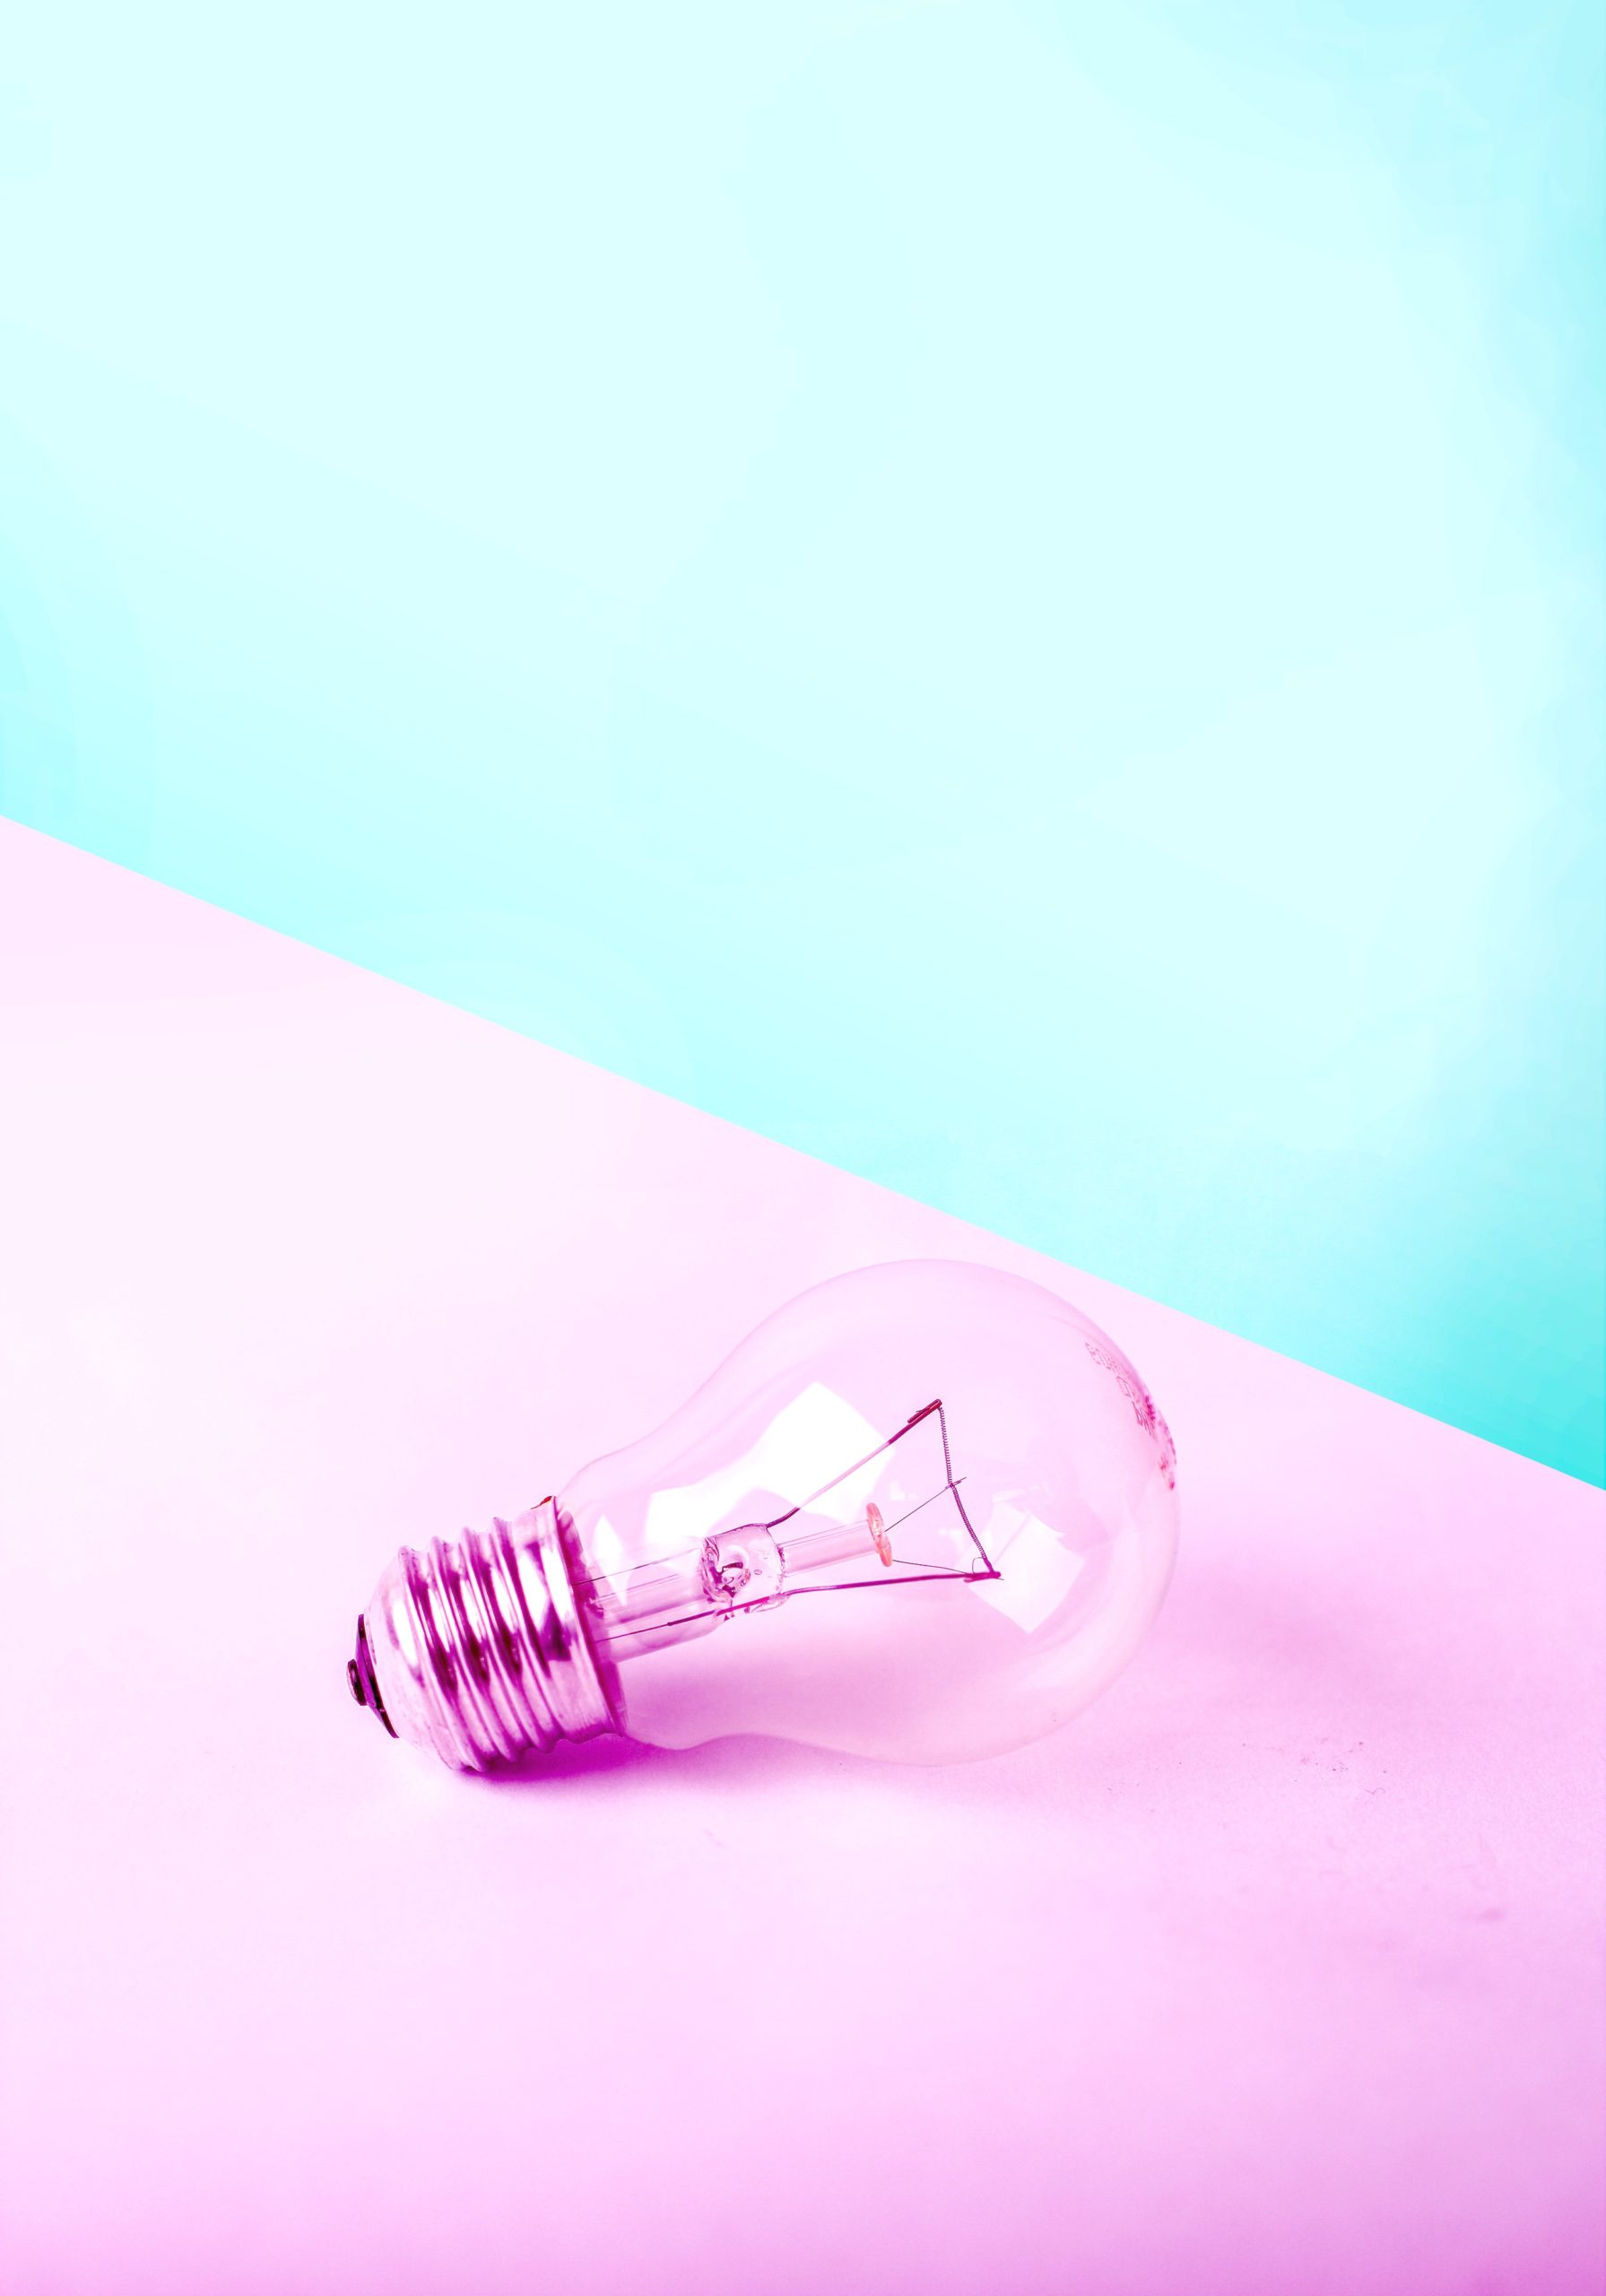 <img src="light.jpg" alt="light bulb to make your home eco-friendly"/> 